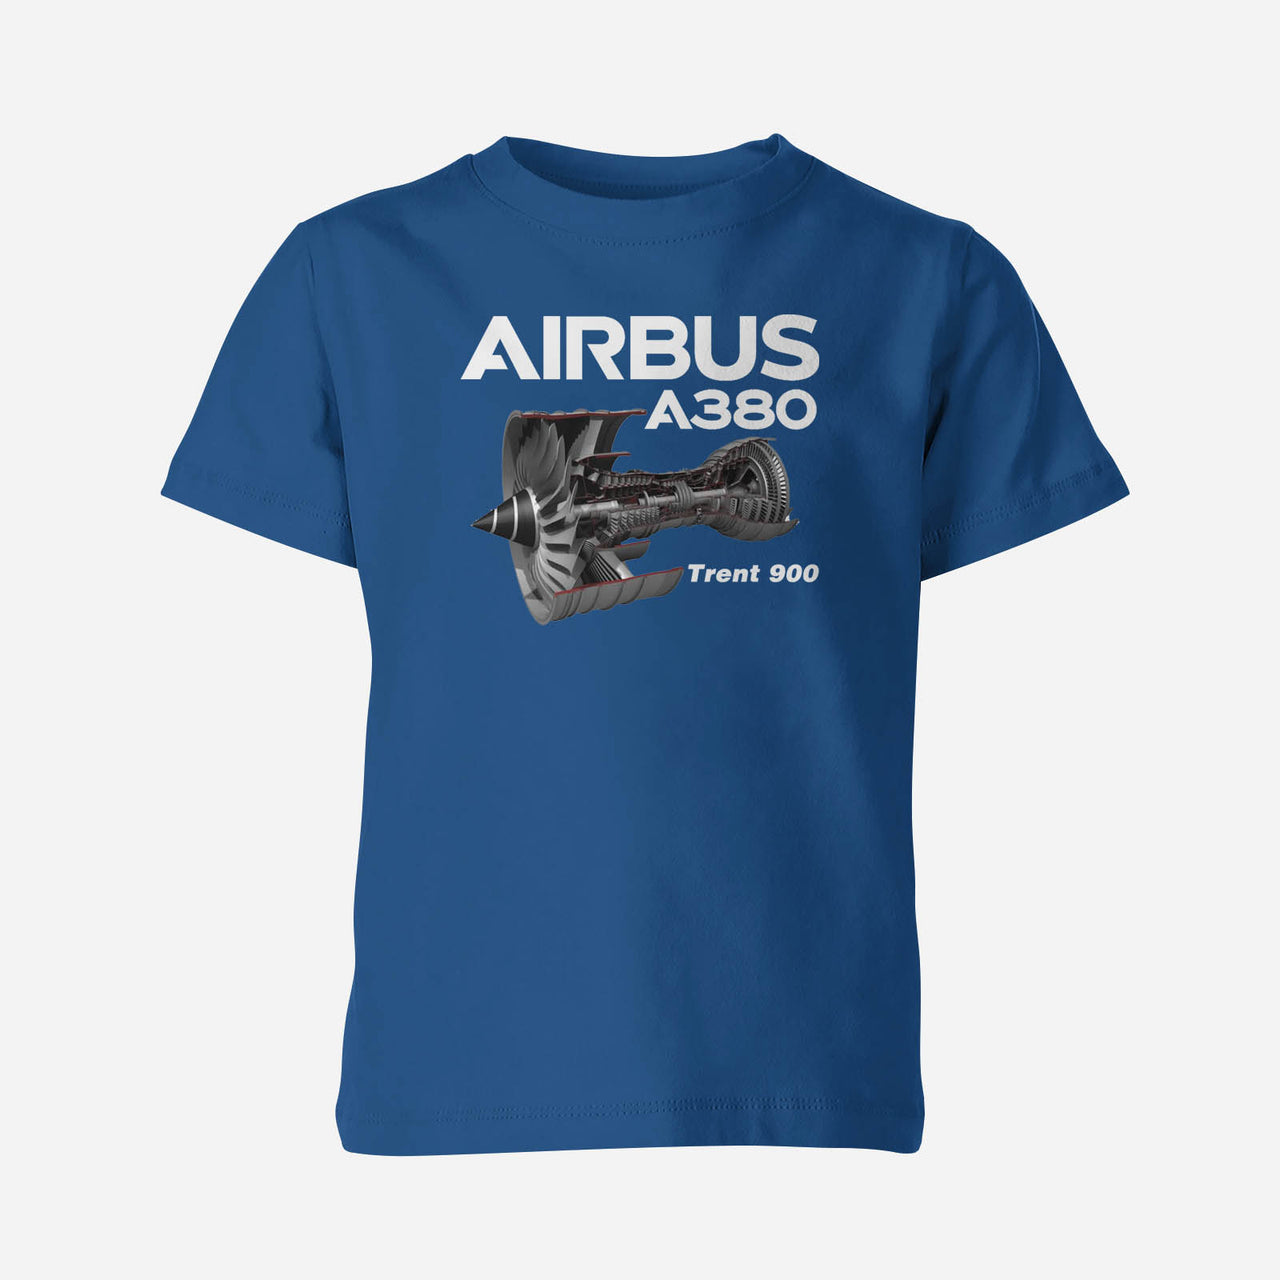 Airbus A380 & Trent 900 Engine Designed Children T-Shirts